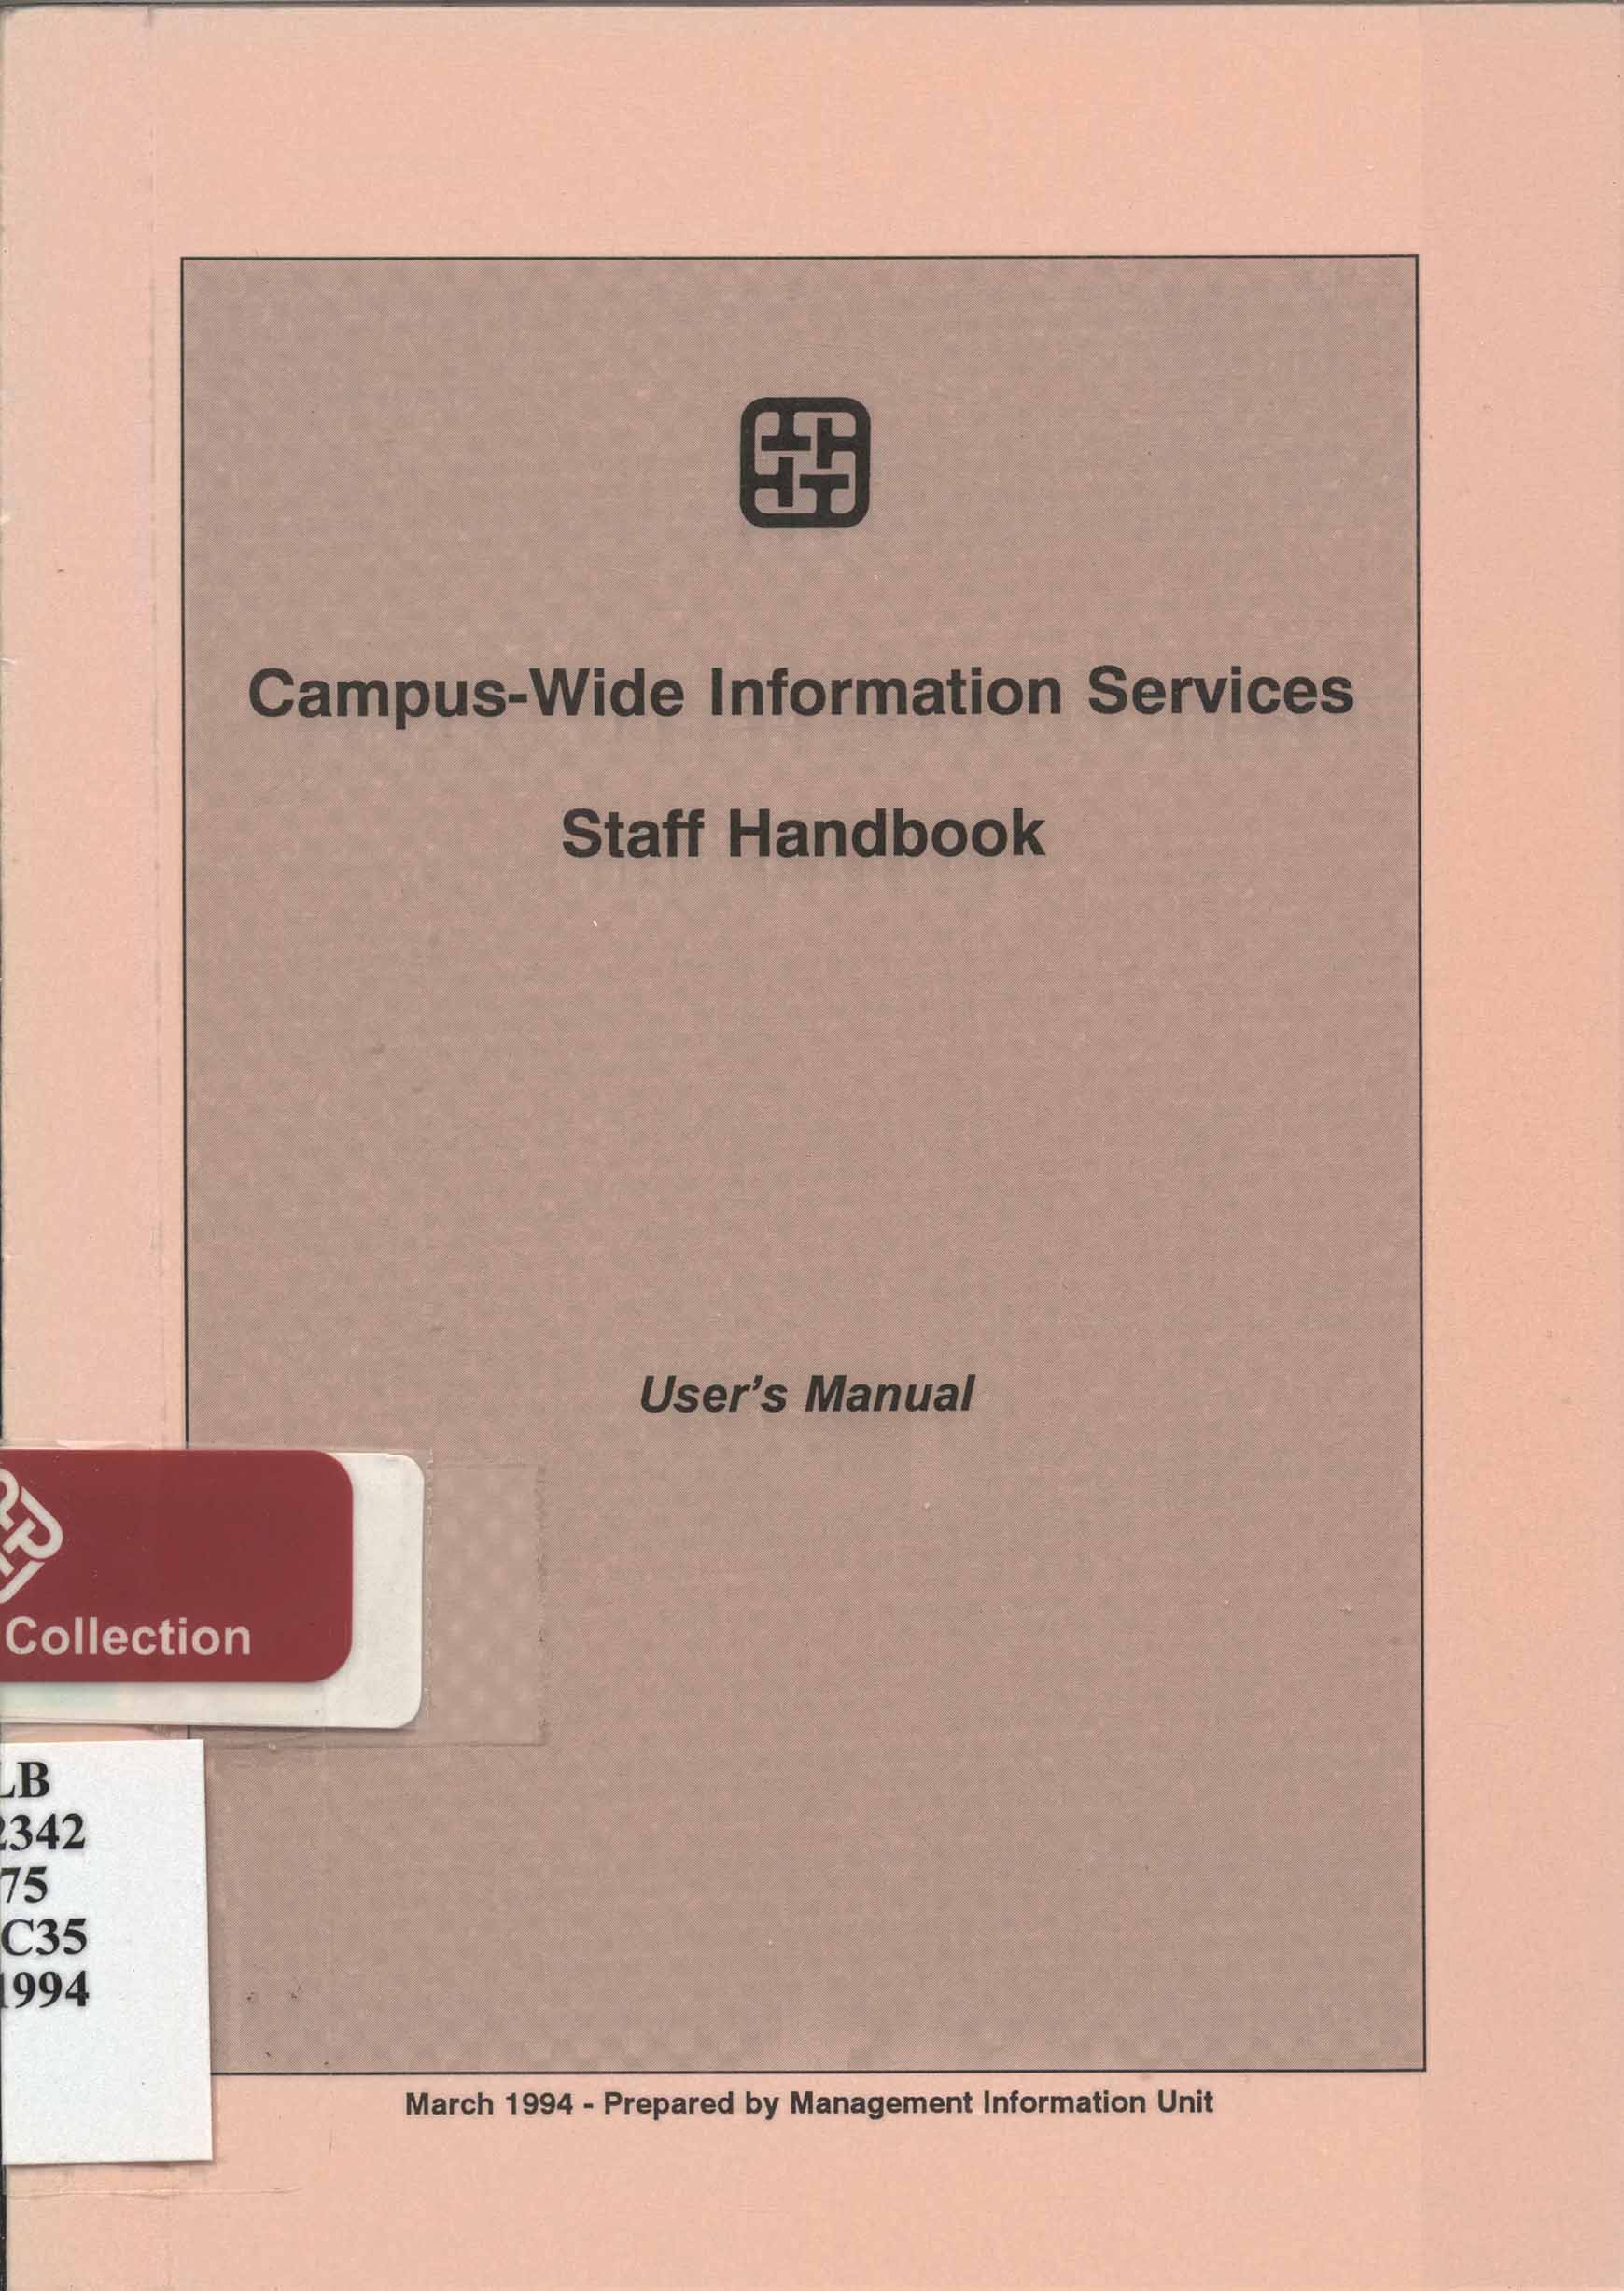 Campus-wide information services : staff handbook : user's manual